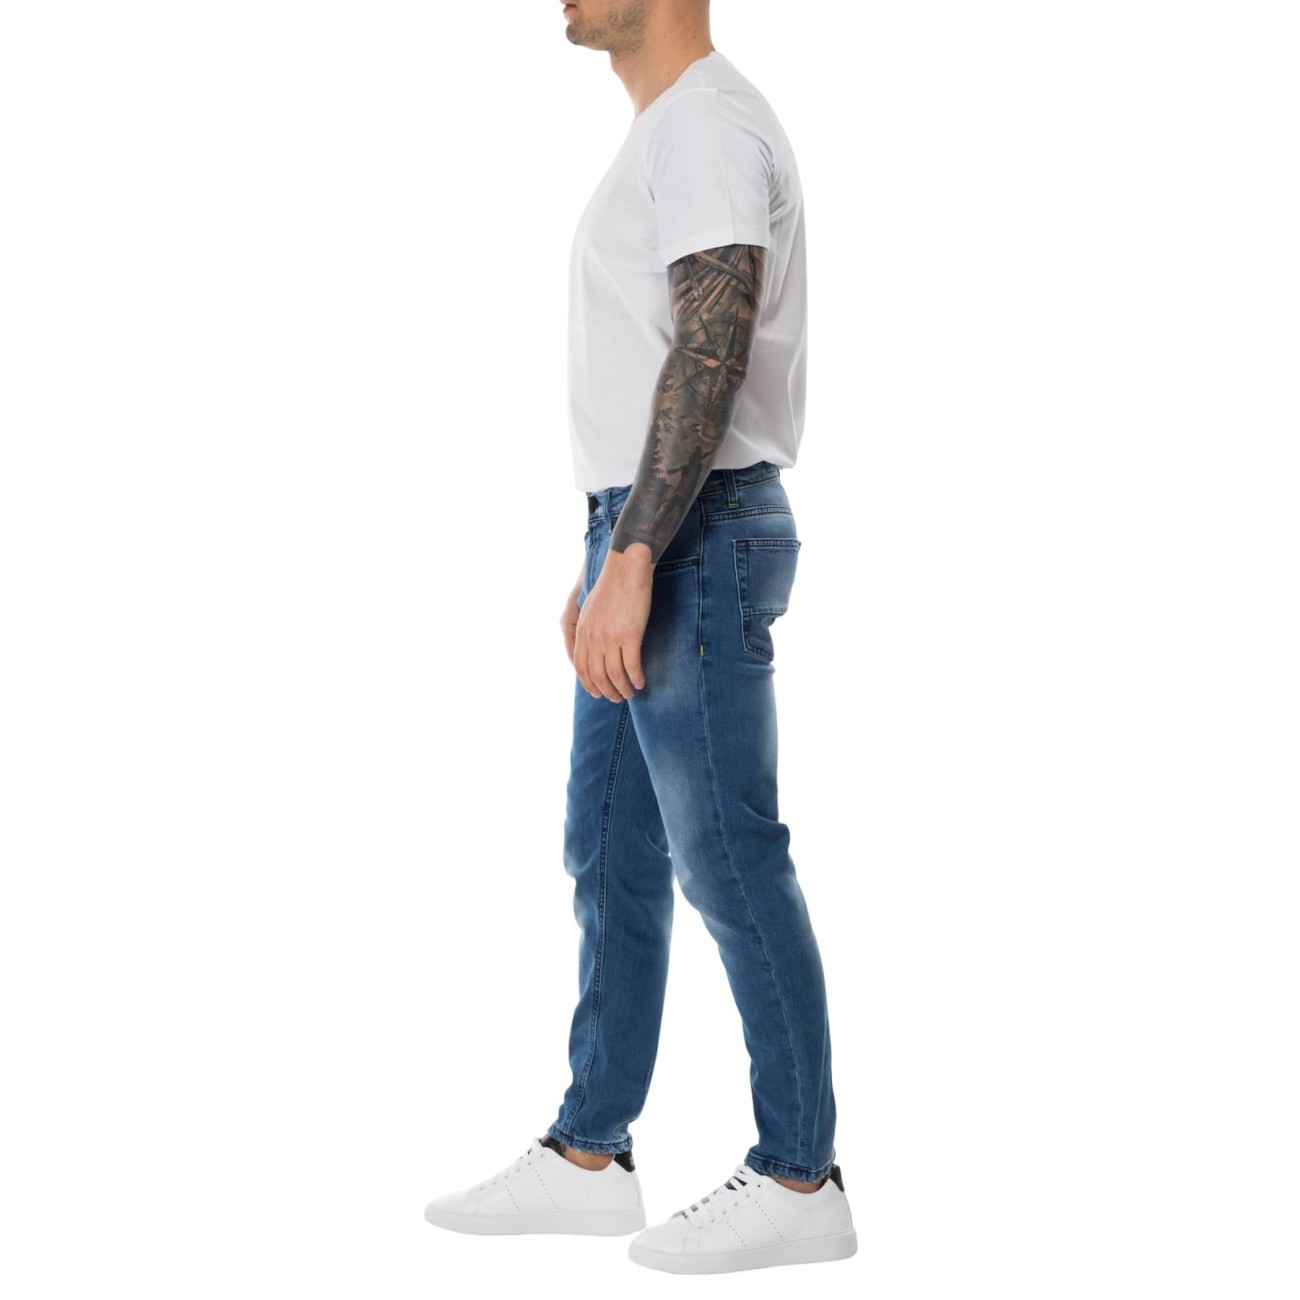 Slim fit men's jeans outfit